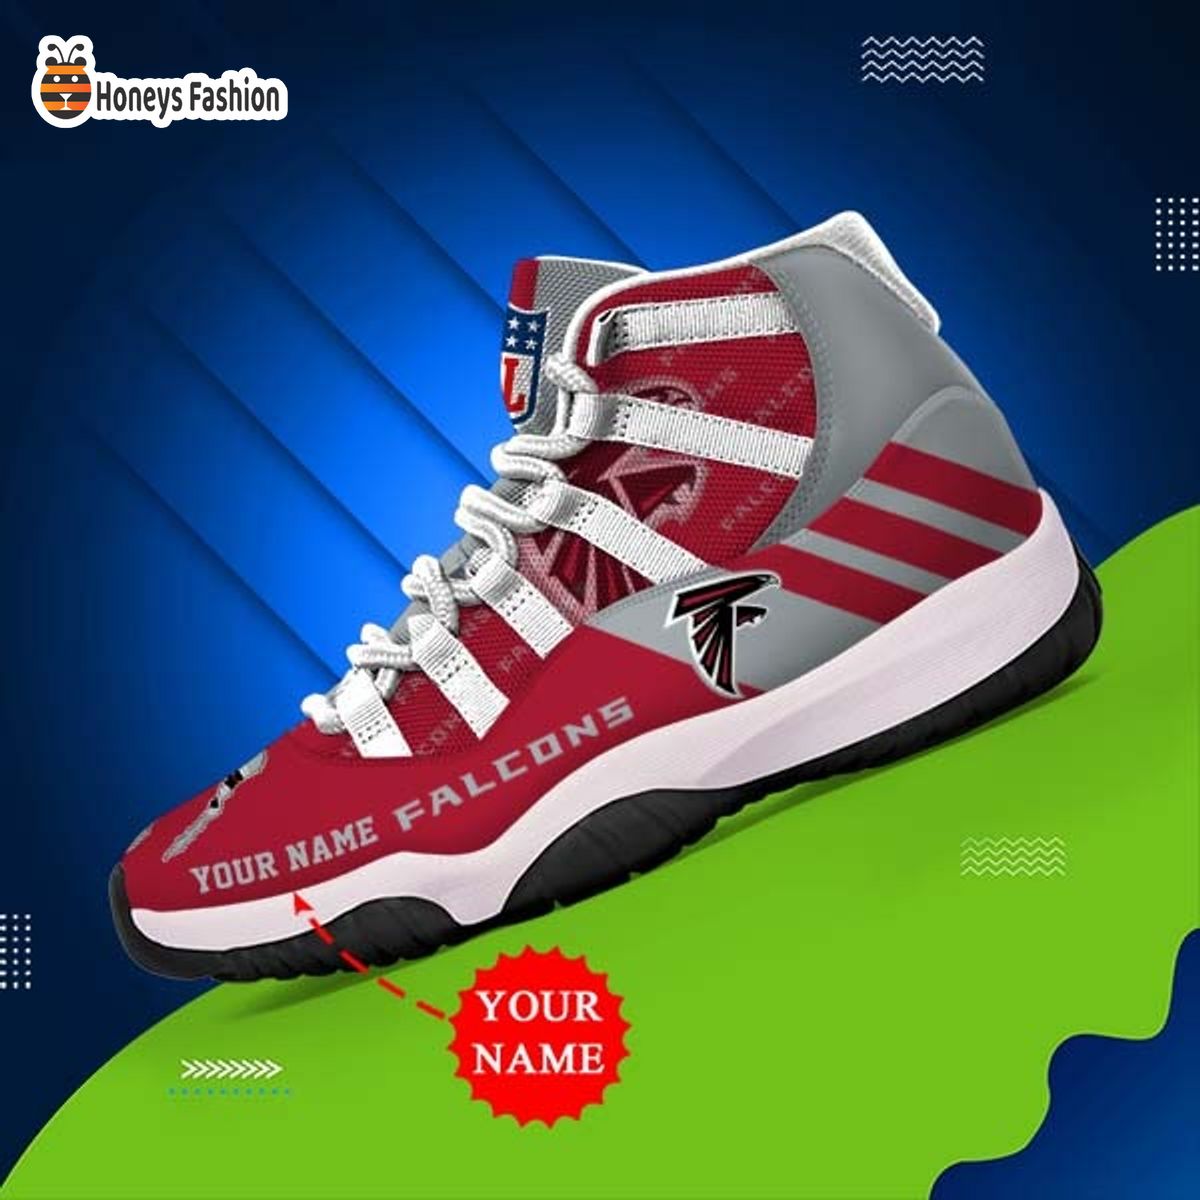 Atlanta Falcons NFL Adidas Personalized Air Jordan 11 Shoes